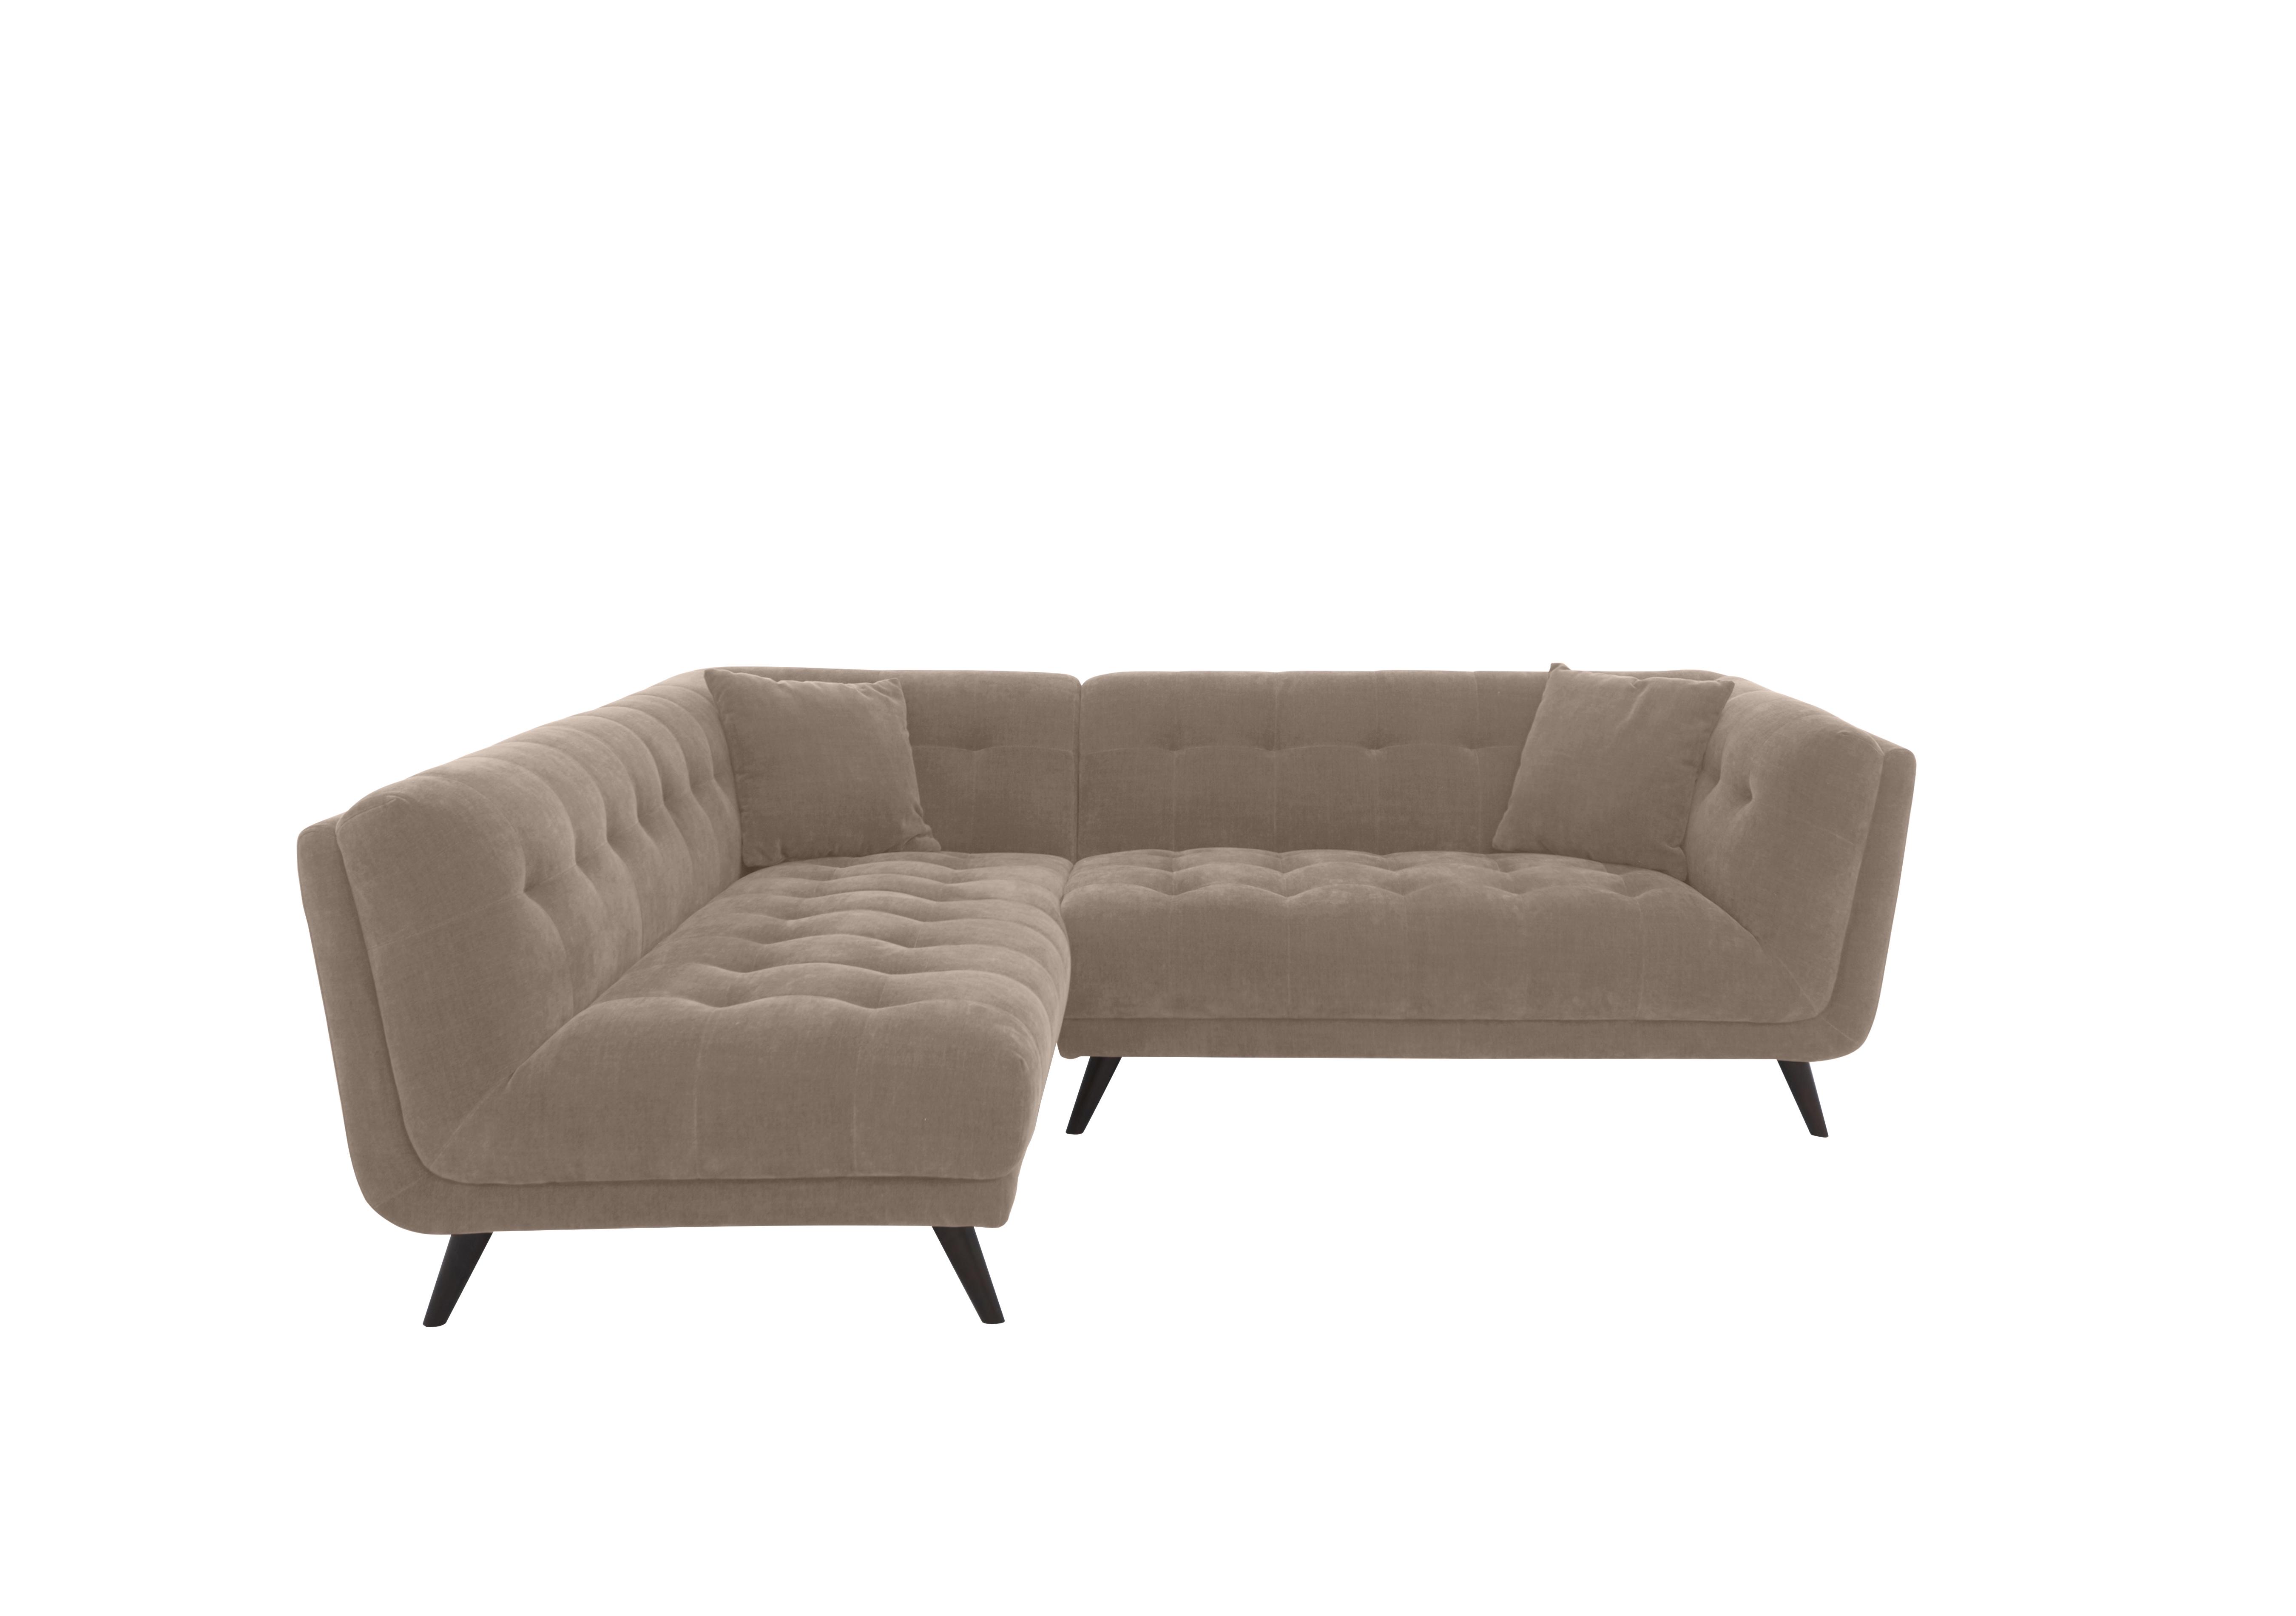 Rene Fabric Chaise End Corner Sofa in Manhattan 58005 Nutmeg Es Ft on Furniture Village